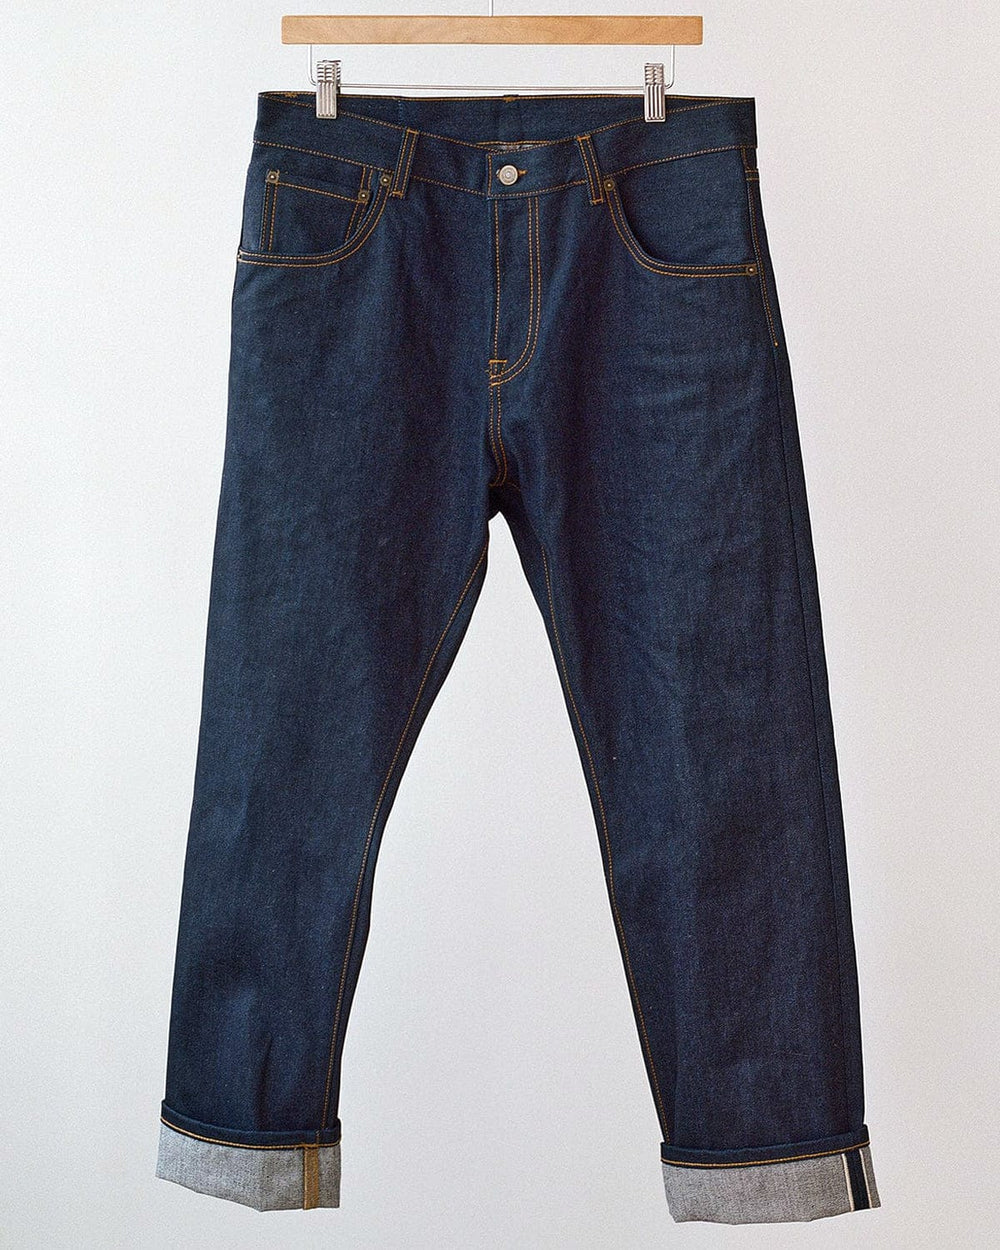 Korra Jeans - Introducing our Italian Denim - Black... | Facebook